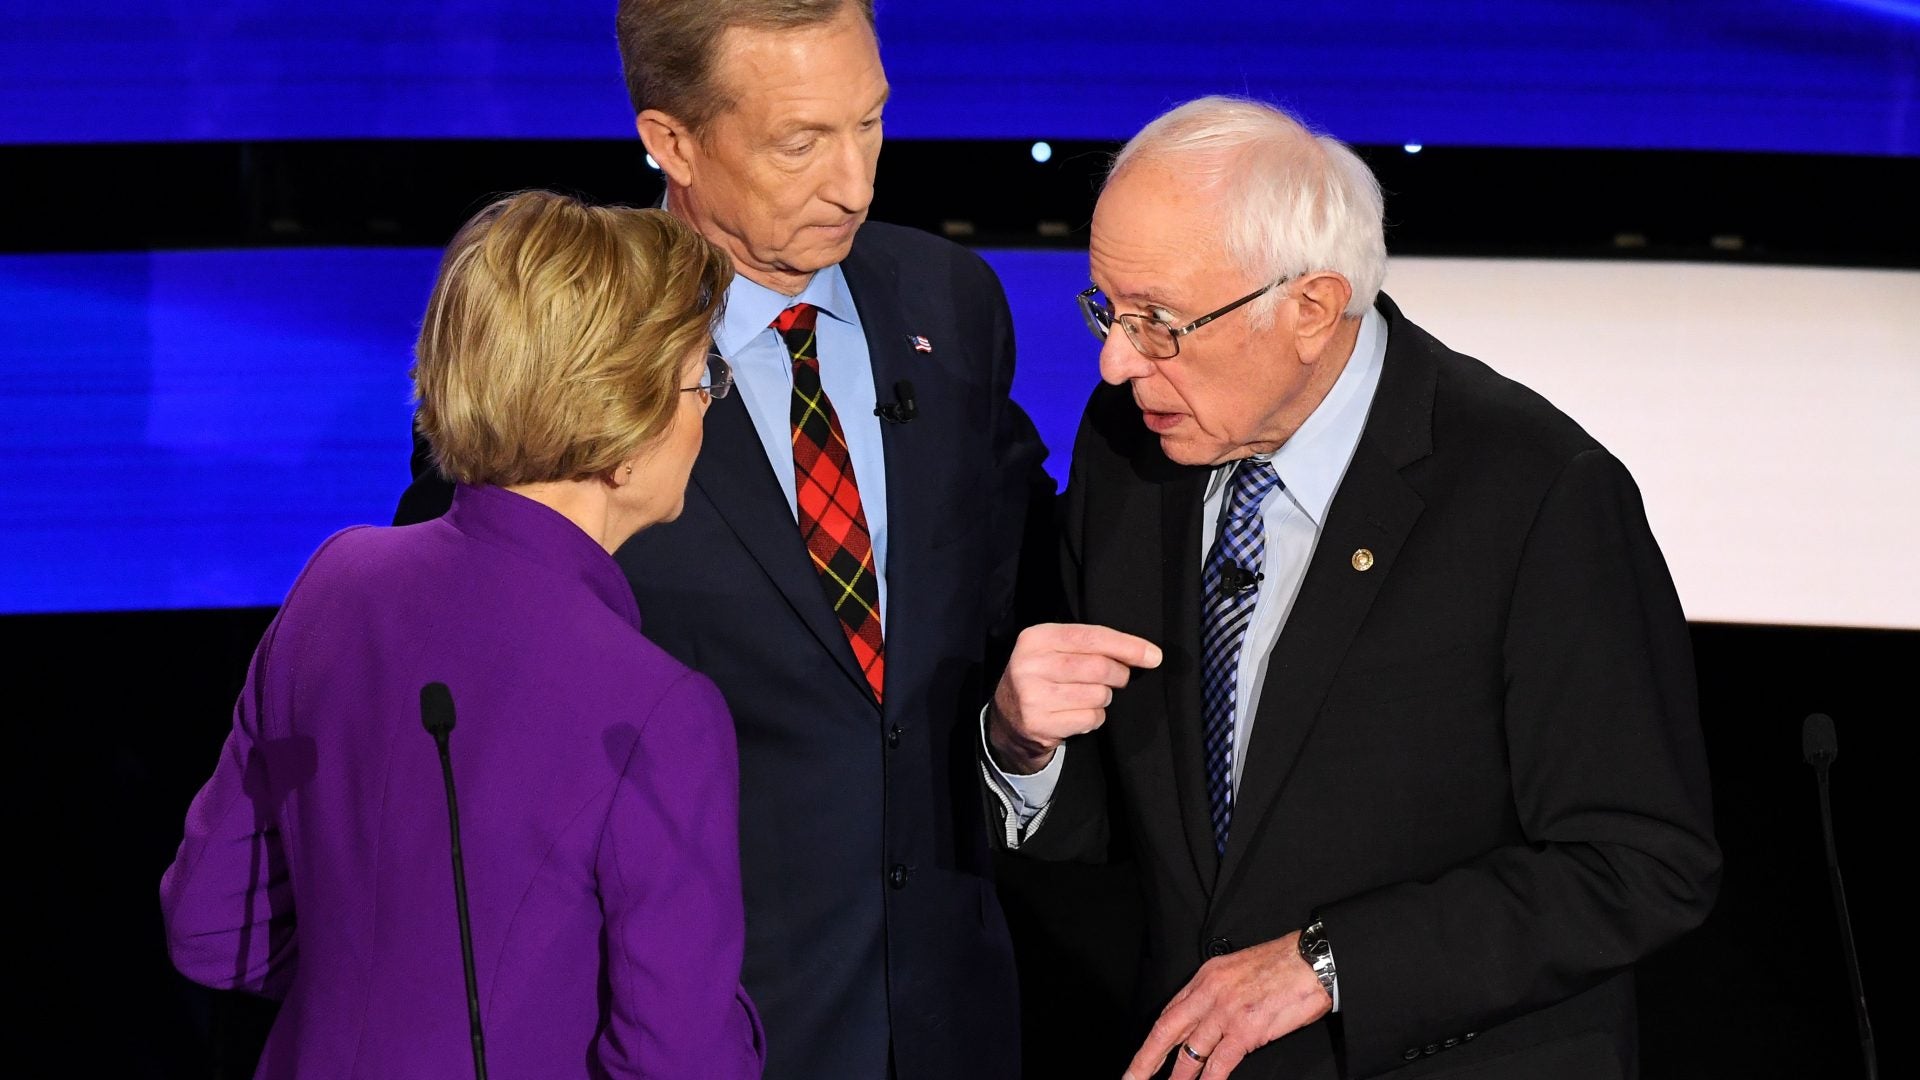 Warren Accused Sanders Of Calling Her A Liar On TV